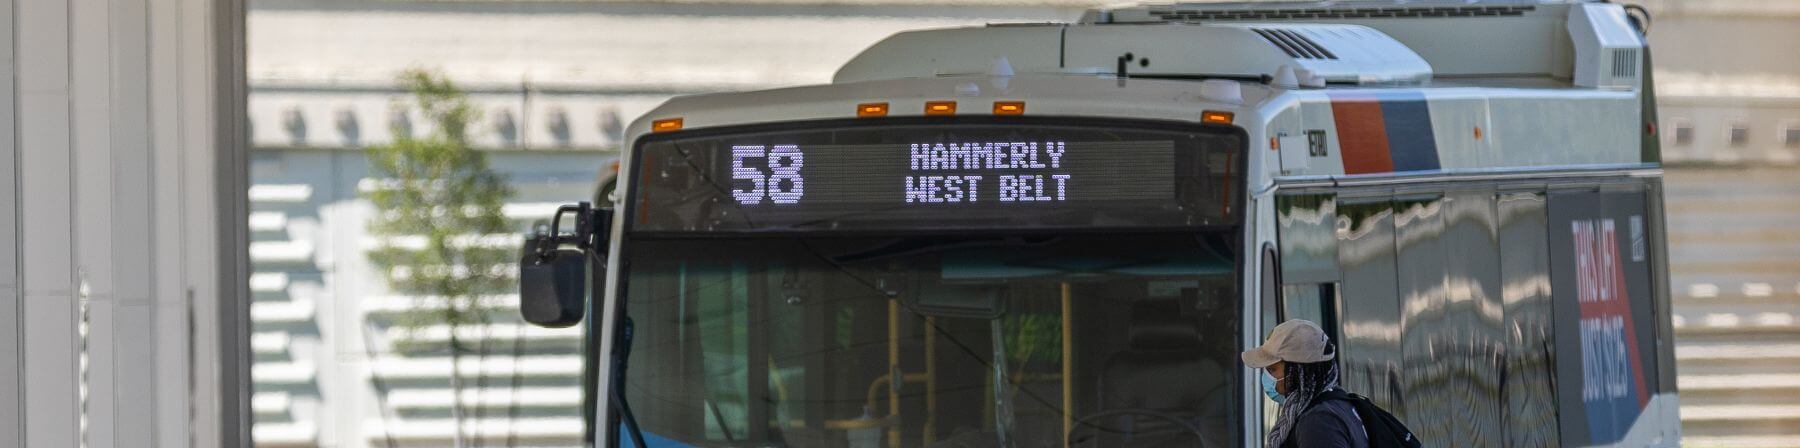 58 Hammerly bus